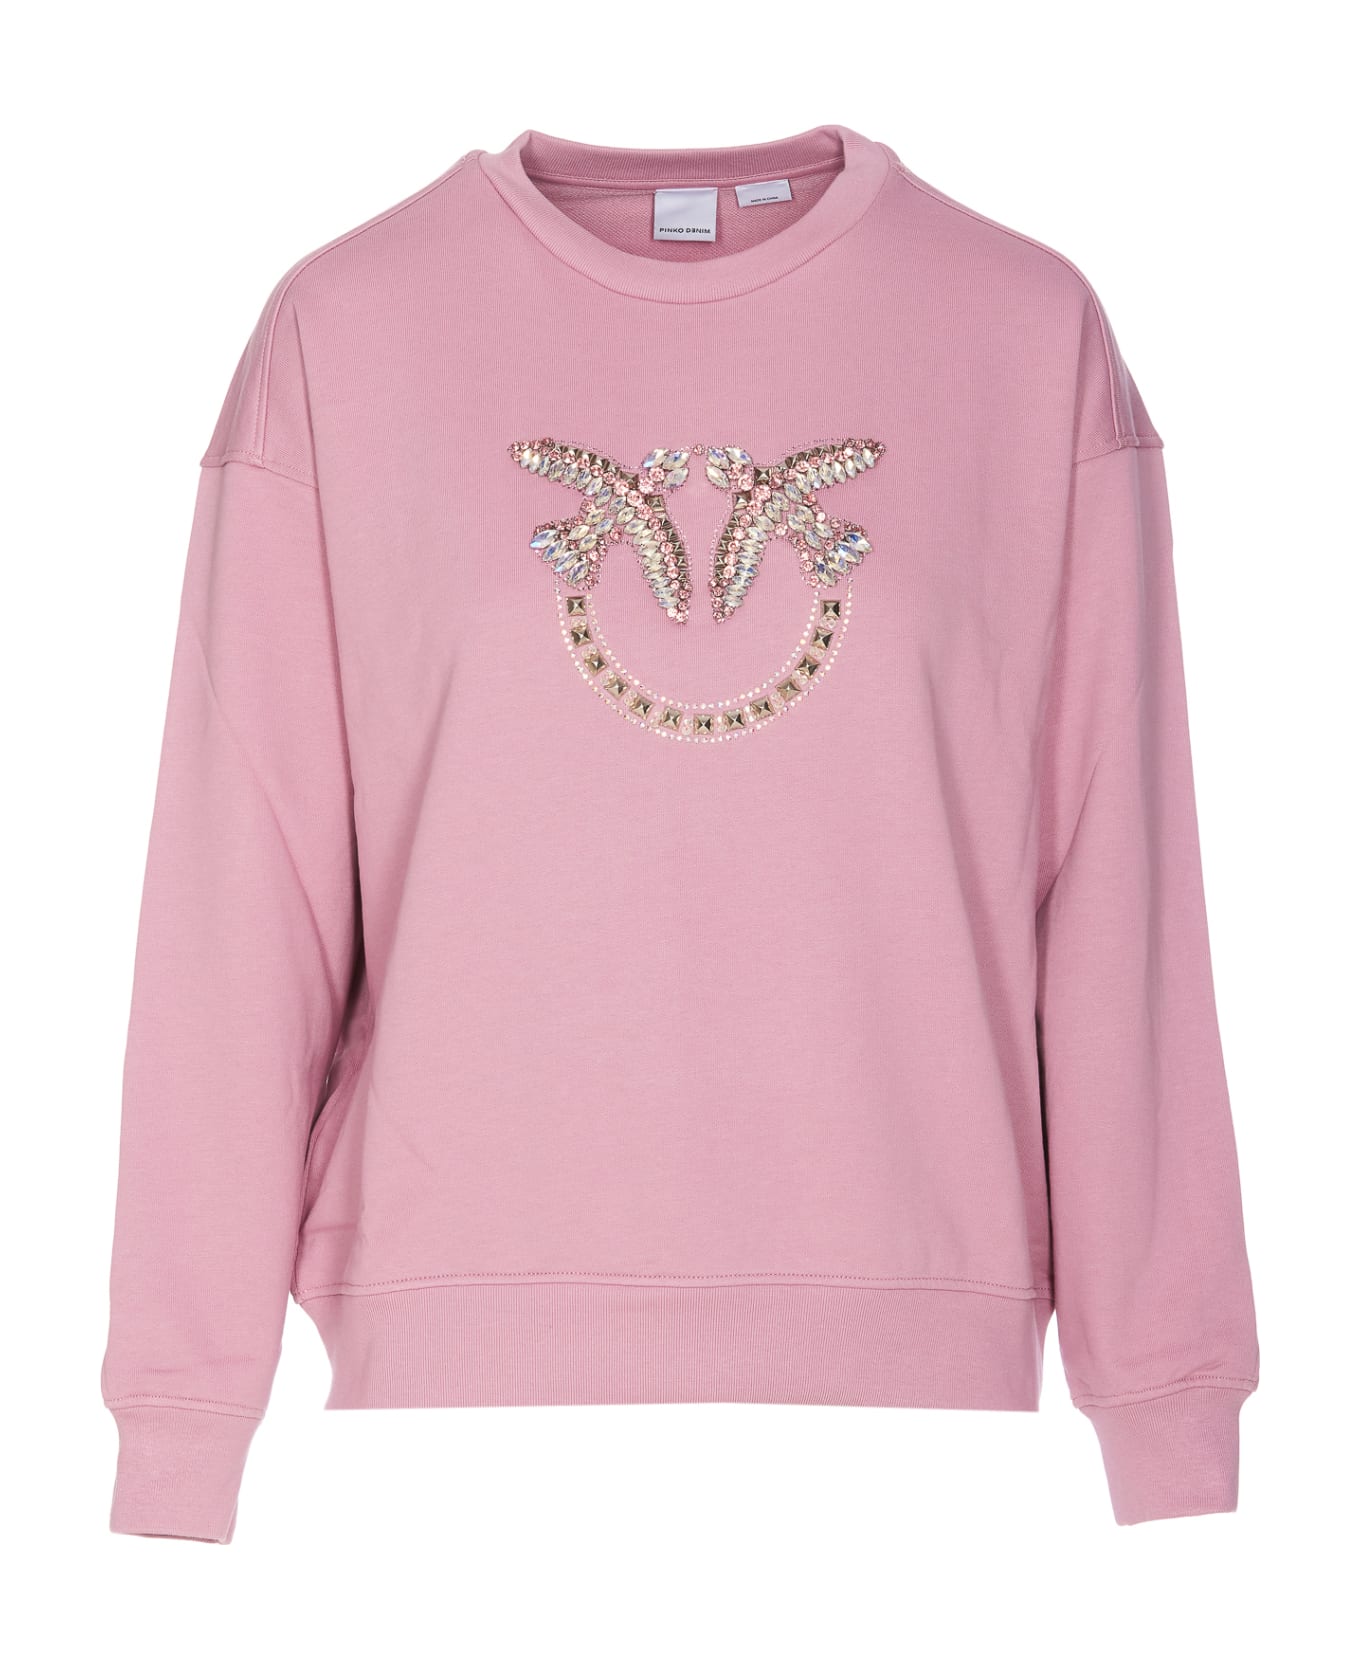 Pinko Sweatshirt With Love Birds Embroidery - Pink